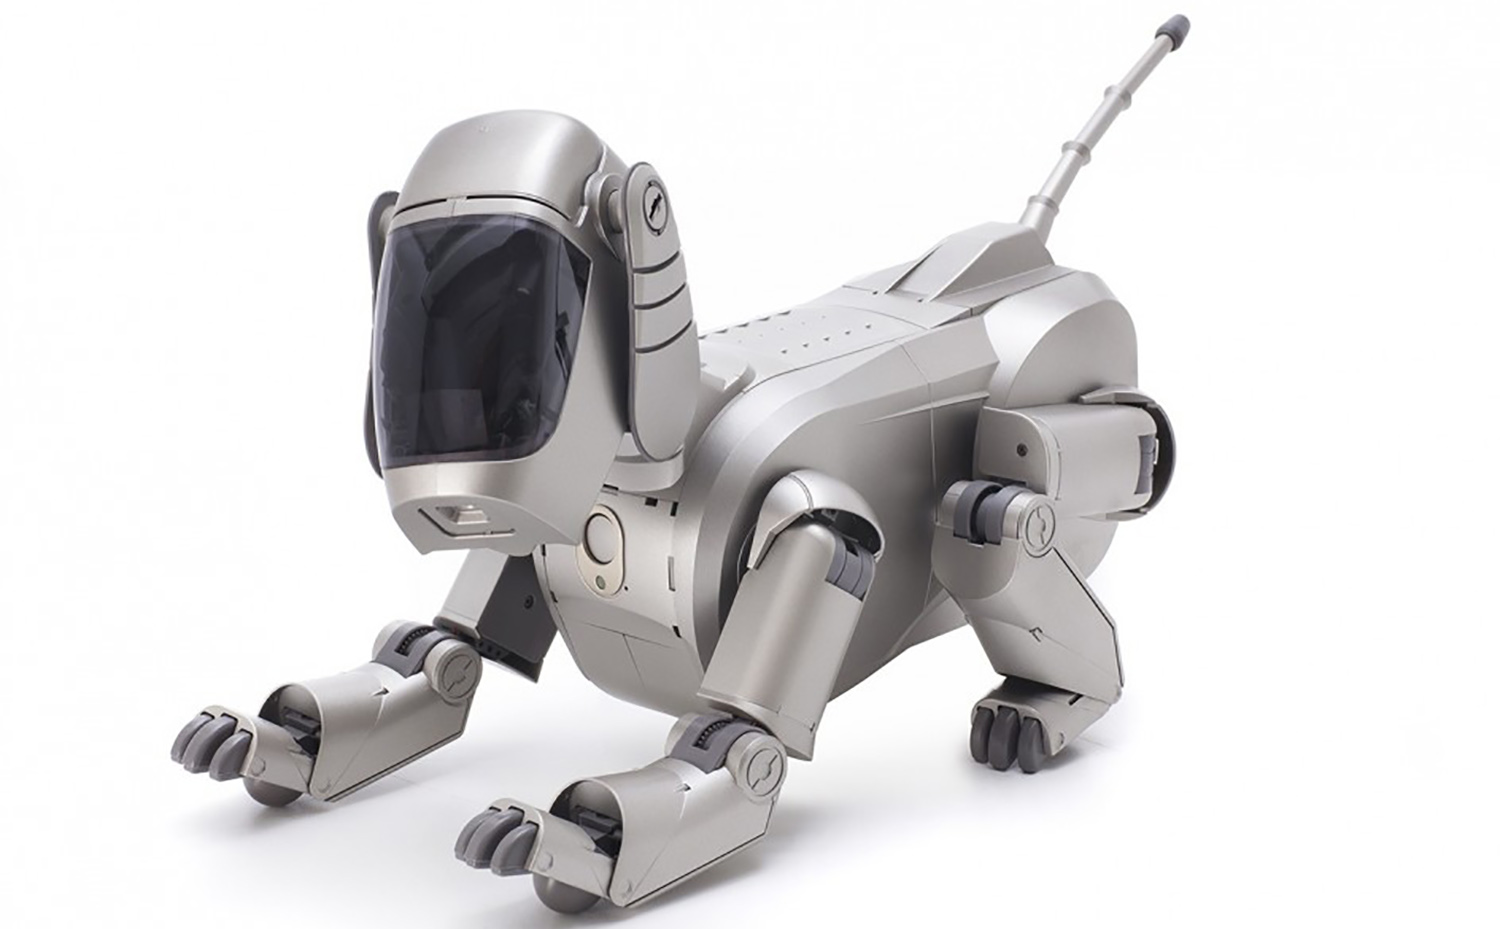 411246-944-699. La mascota robot diseñada por Hajime Sorayama para Sony Corporation en 1999